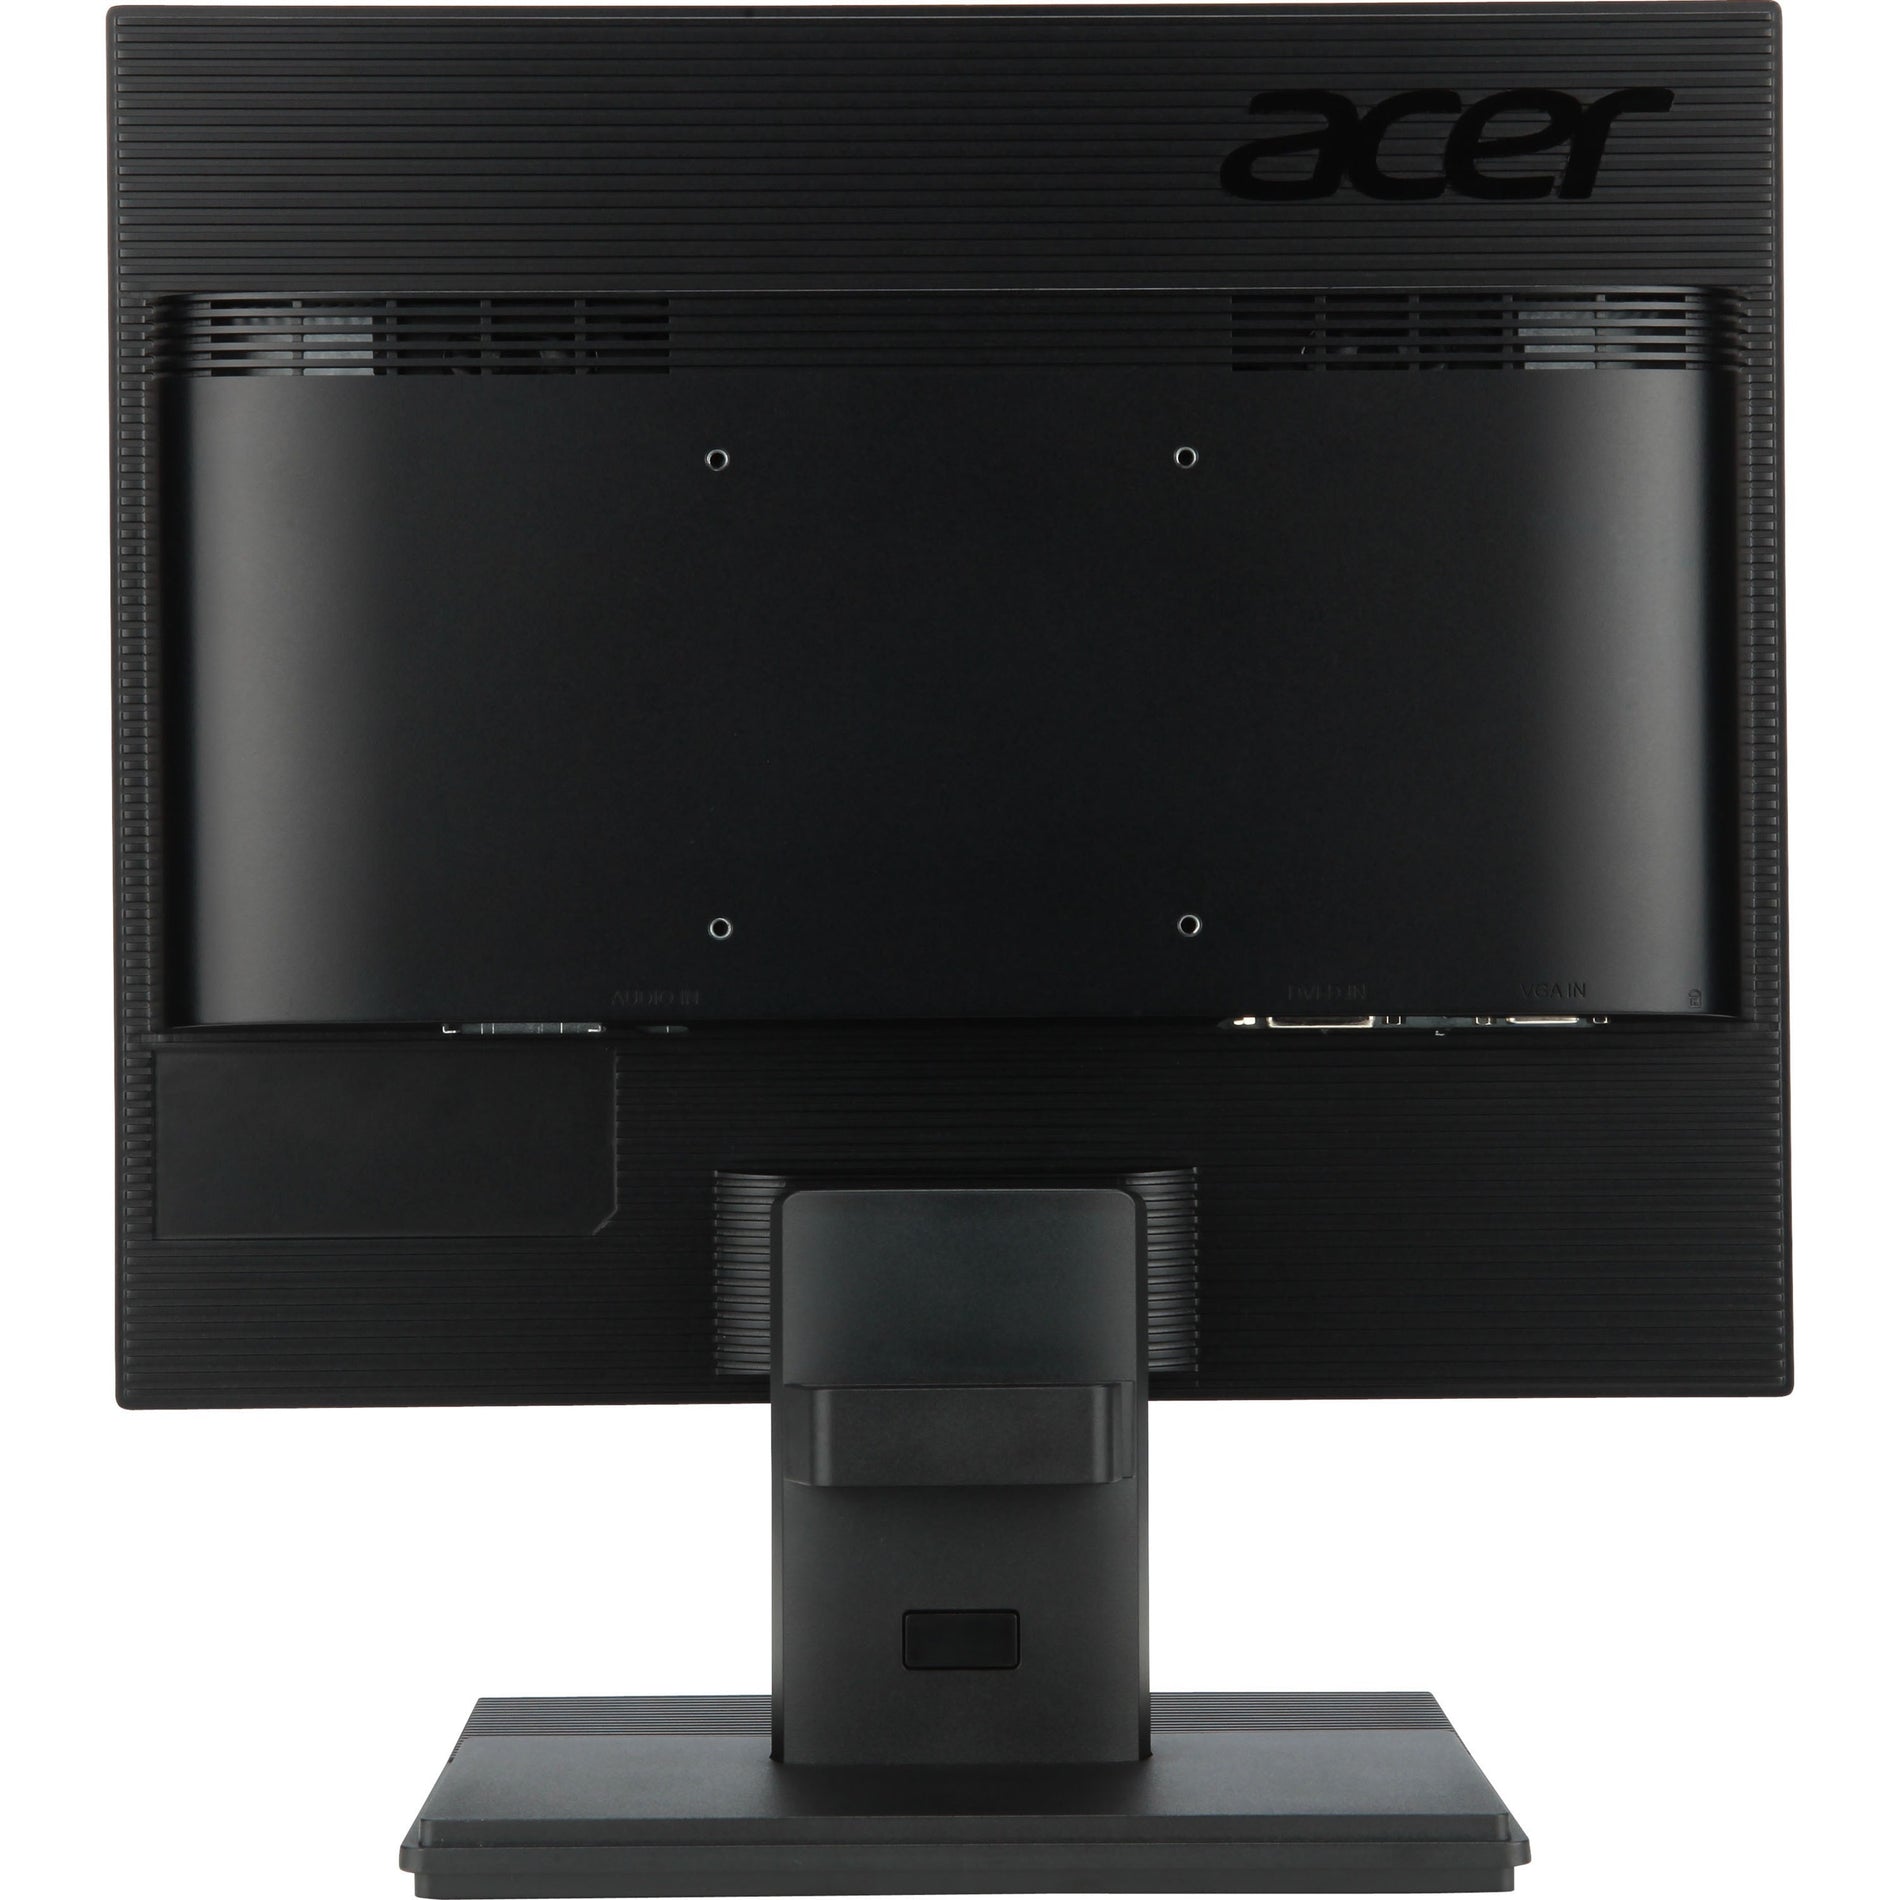 Acer UM.CV6AA.B02 V196L LCD Monitor, 19" 5:4 5ms 250 Nit LED, VGA, TCO Certified